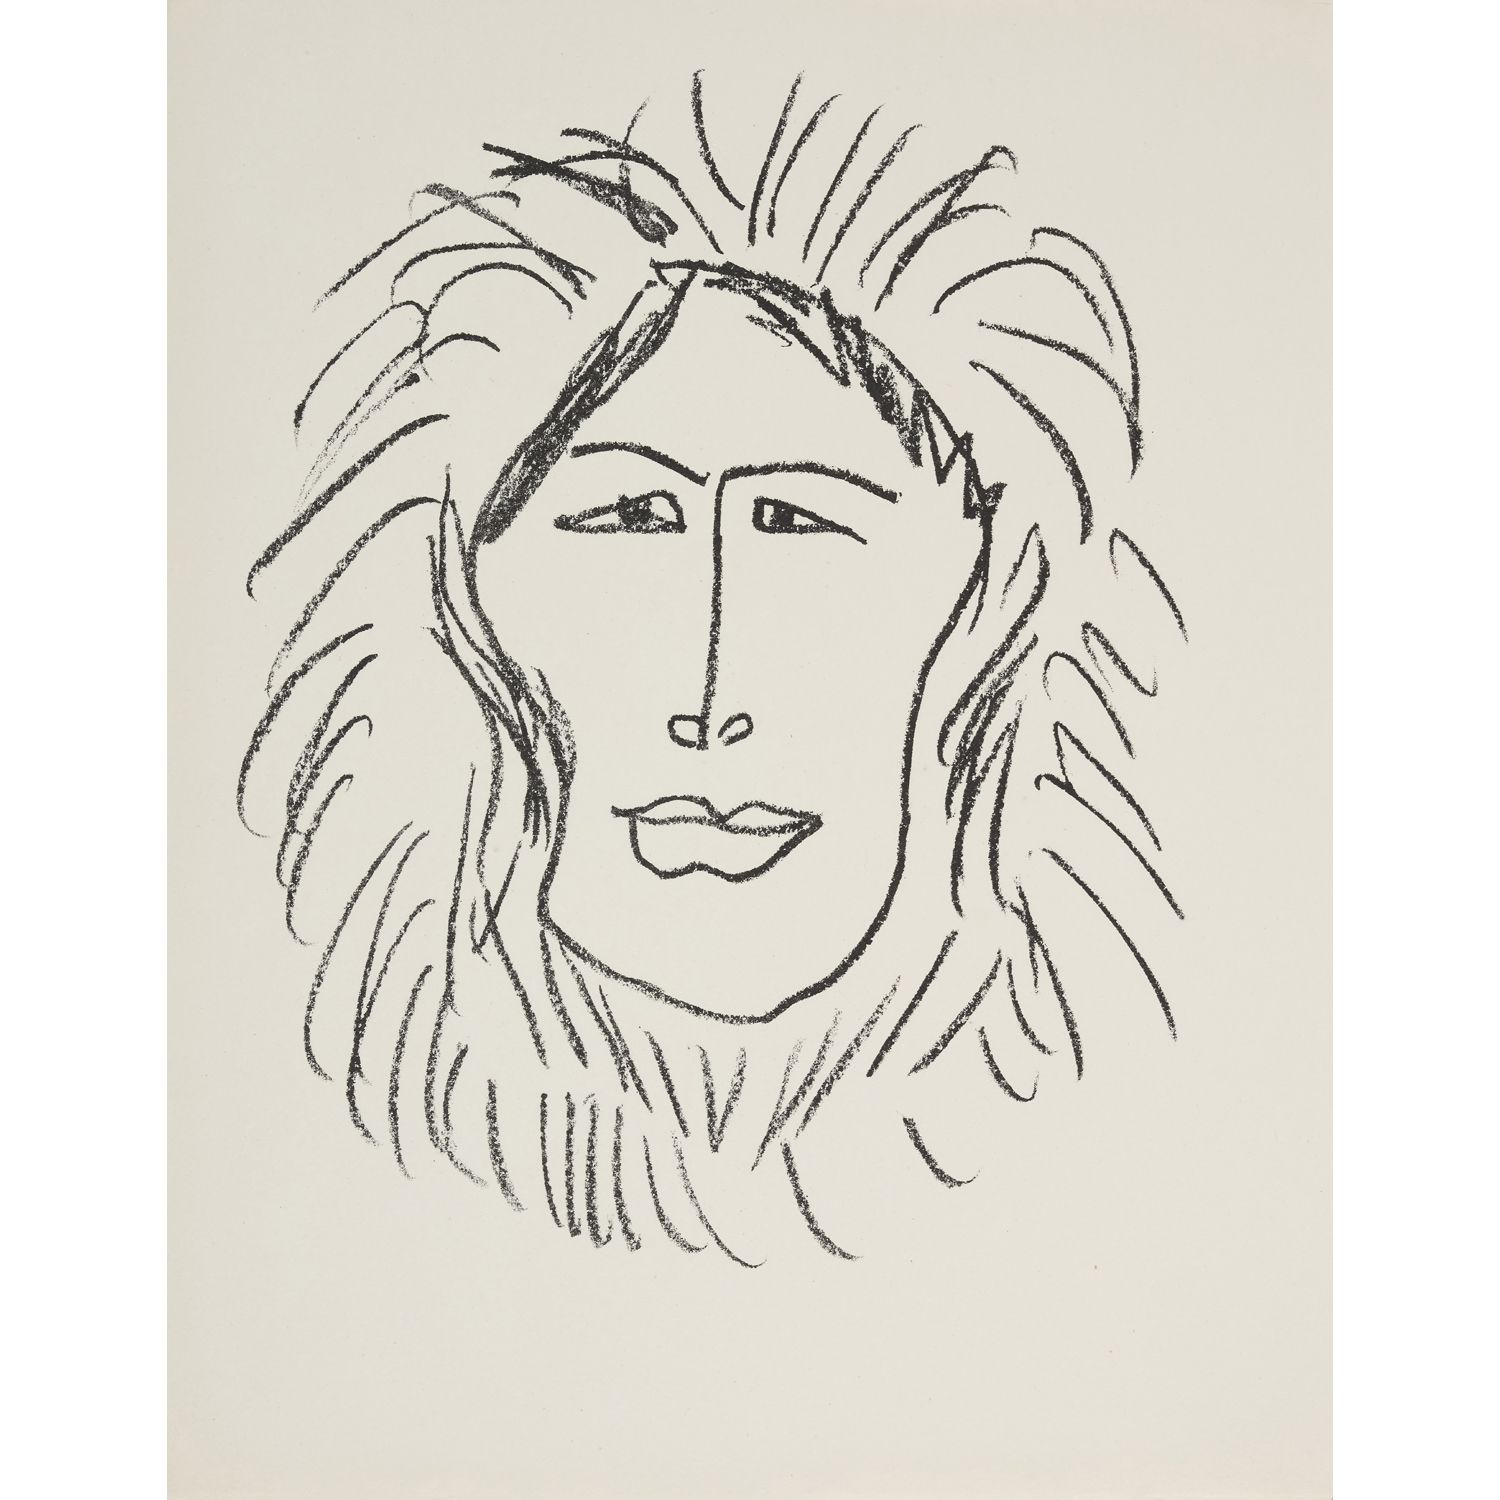 Henri Matisse (1869-1954) Georges Duthuit (1891-1973) Henri Matisse (1869-1954)
&hellip;